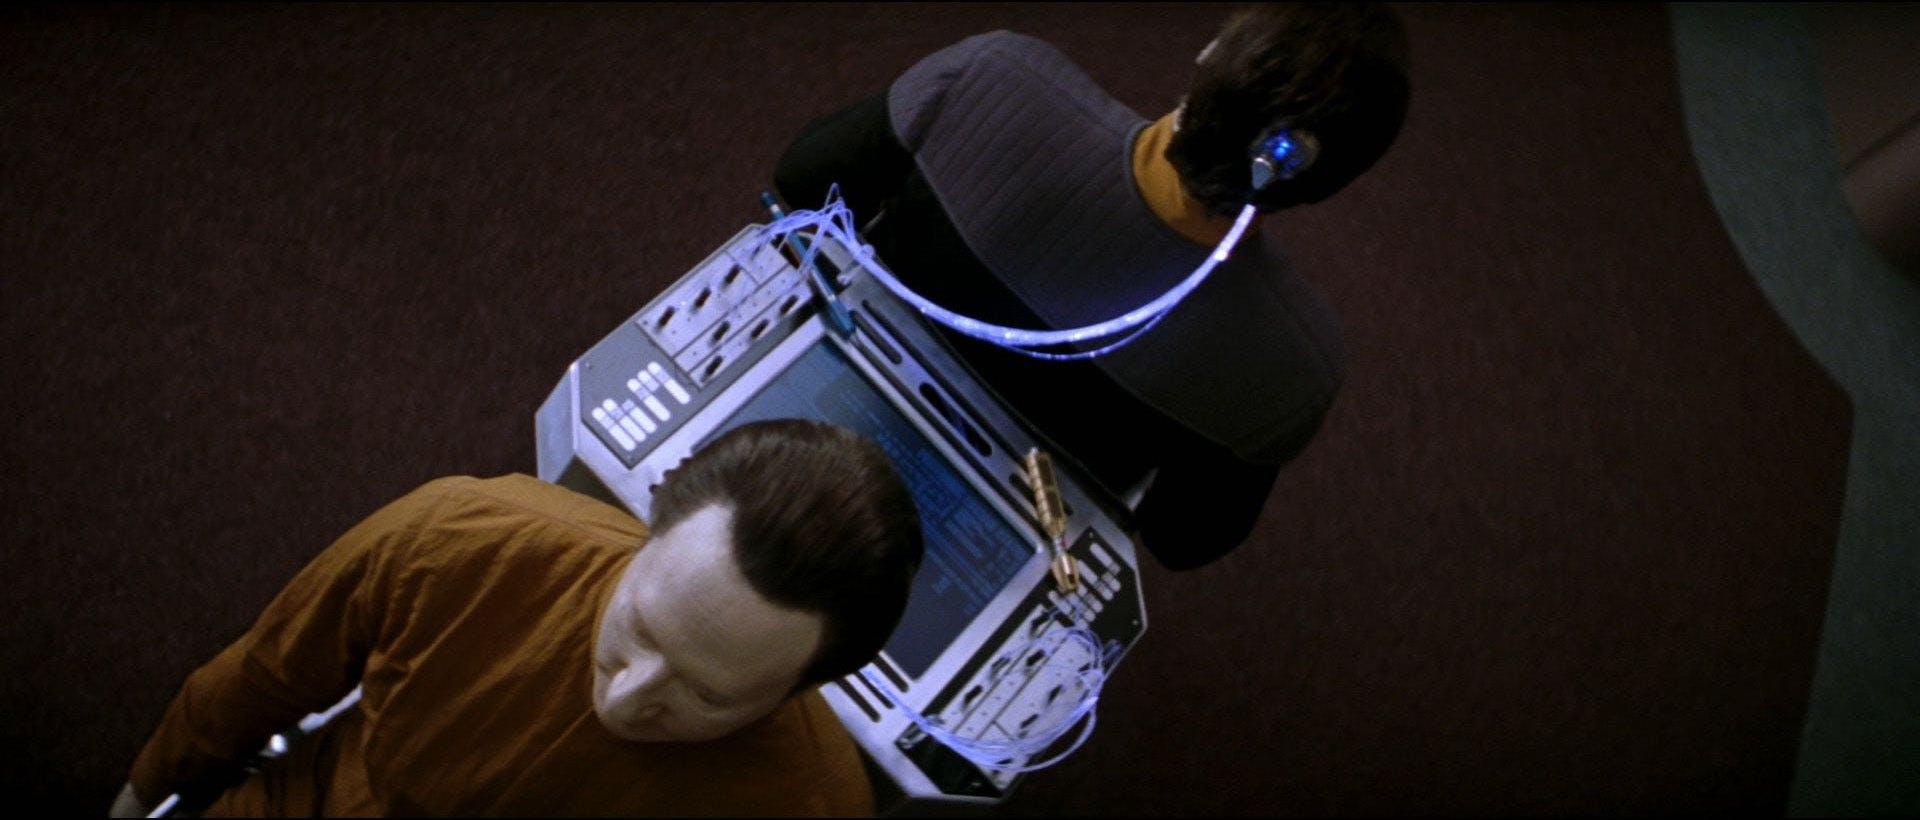 Data provides a memory download for B-4 in Star Trek Nemesis